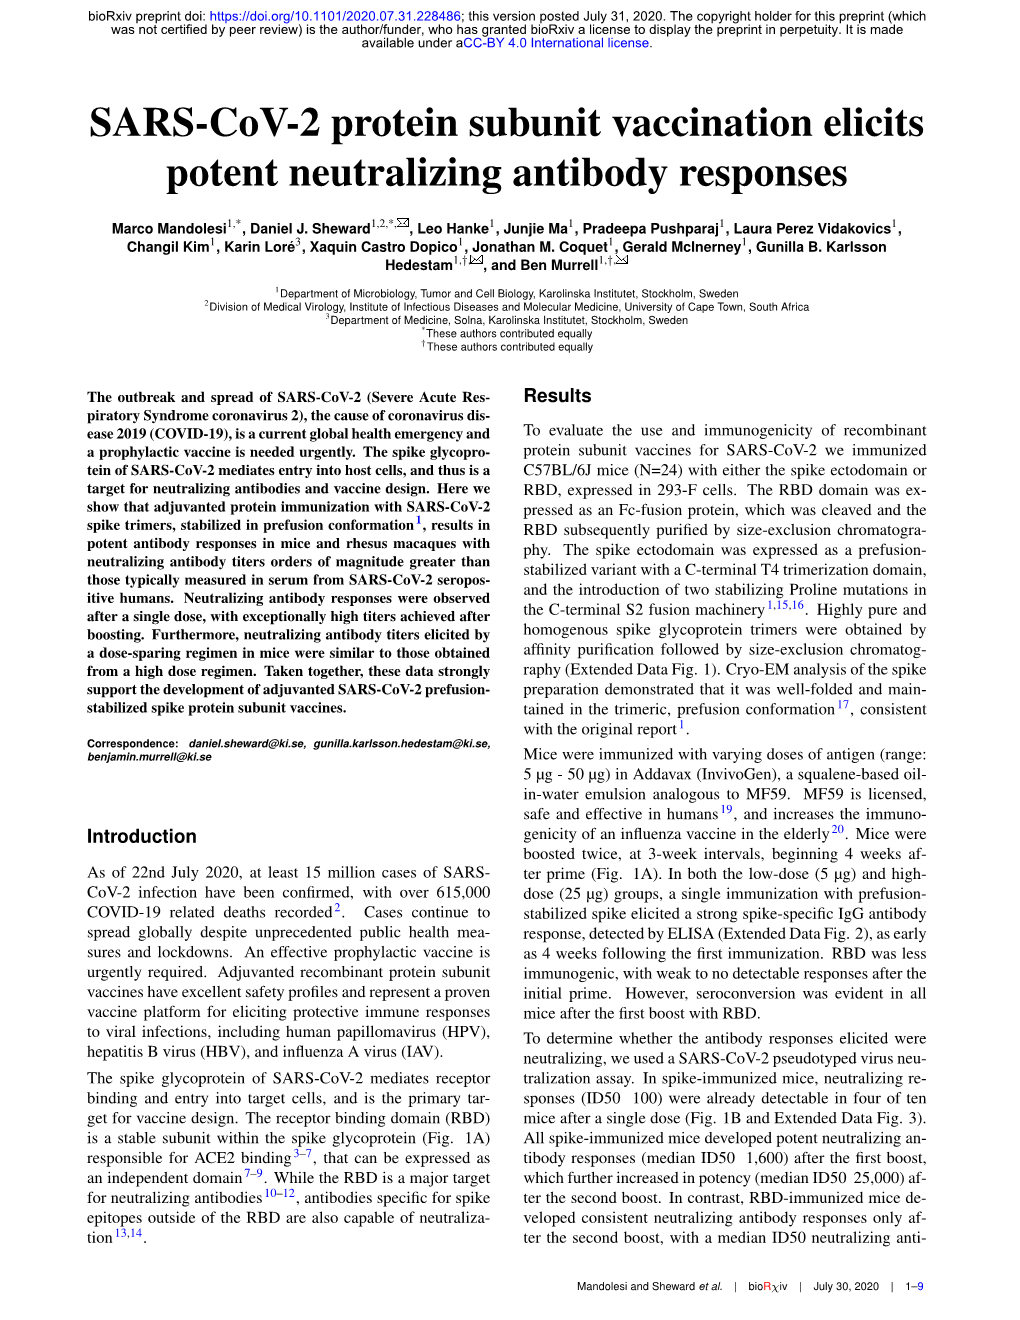 SARS-Cov-2 Protein Subunit Vaccination Elicits Potent Neutralizing Antibody Responses